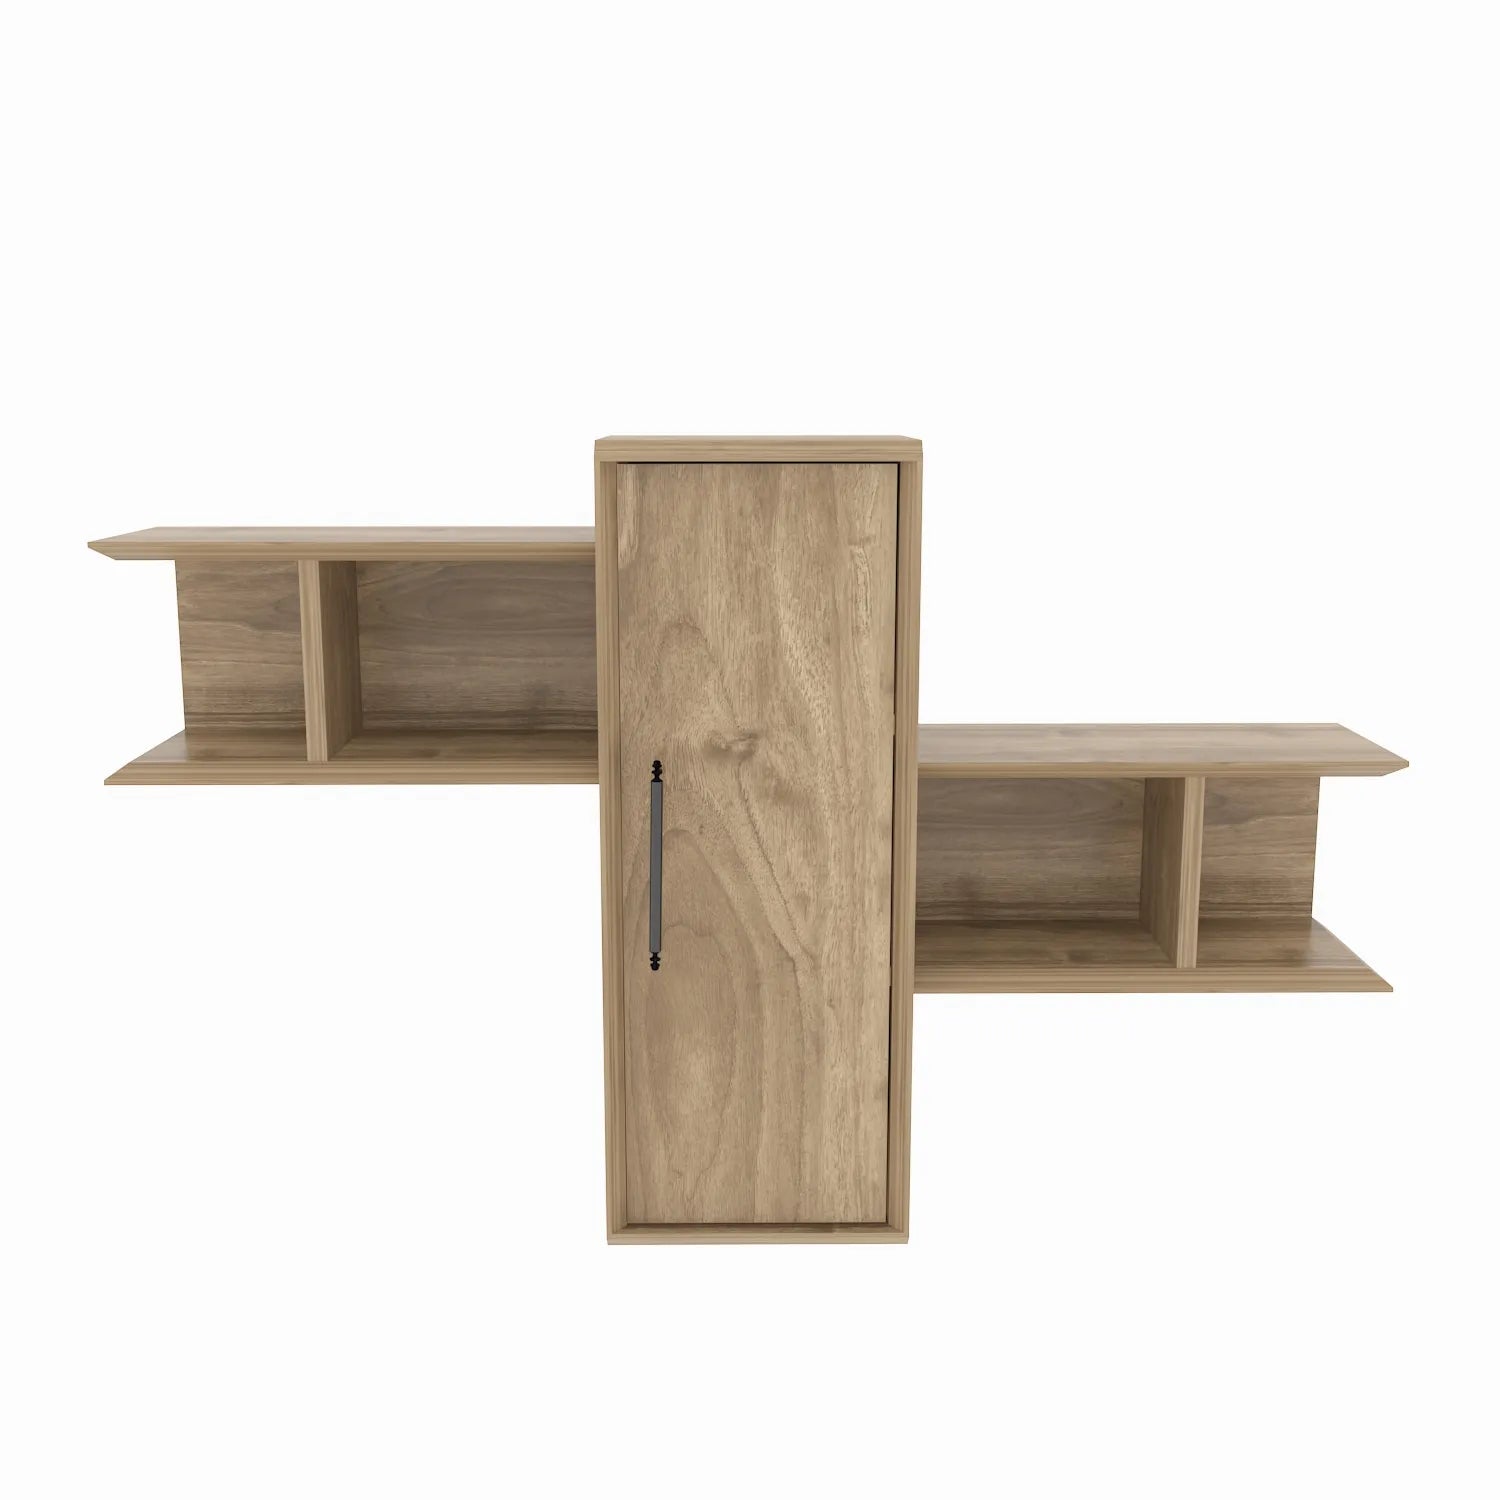 Olida Wall Shelf - Modern Design | 2 Shelves and Cabinet for Storage